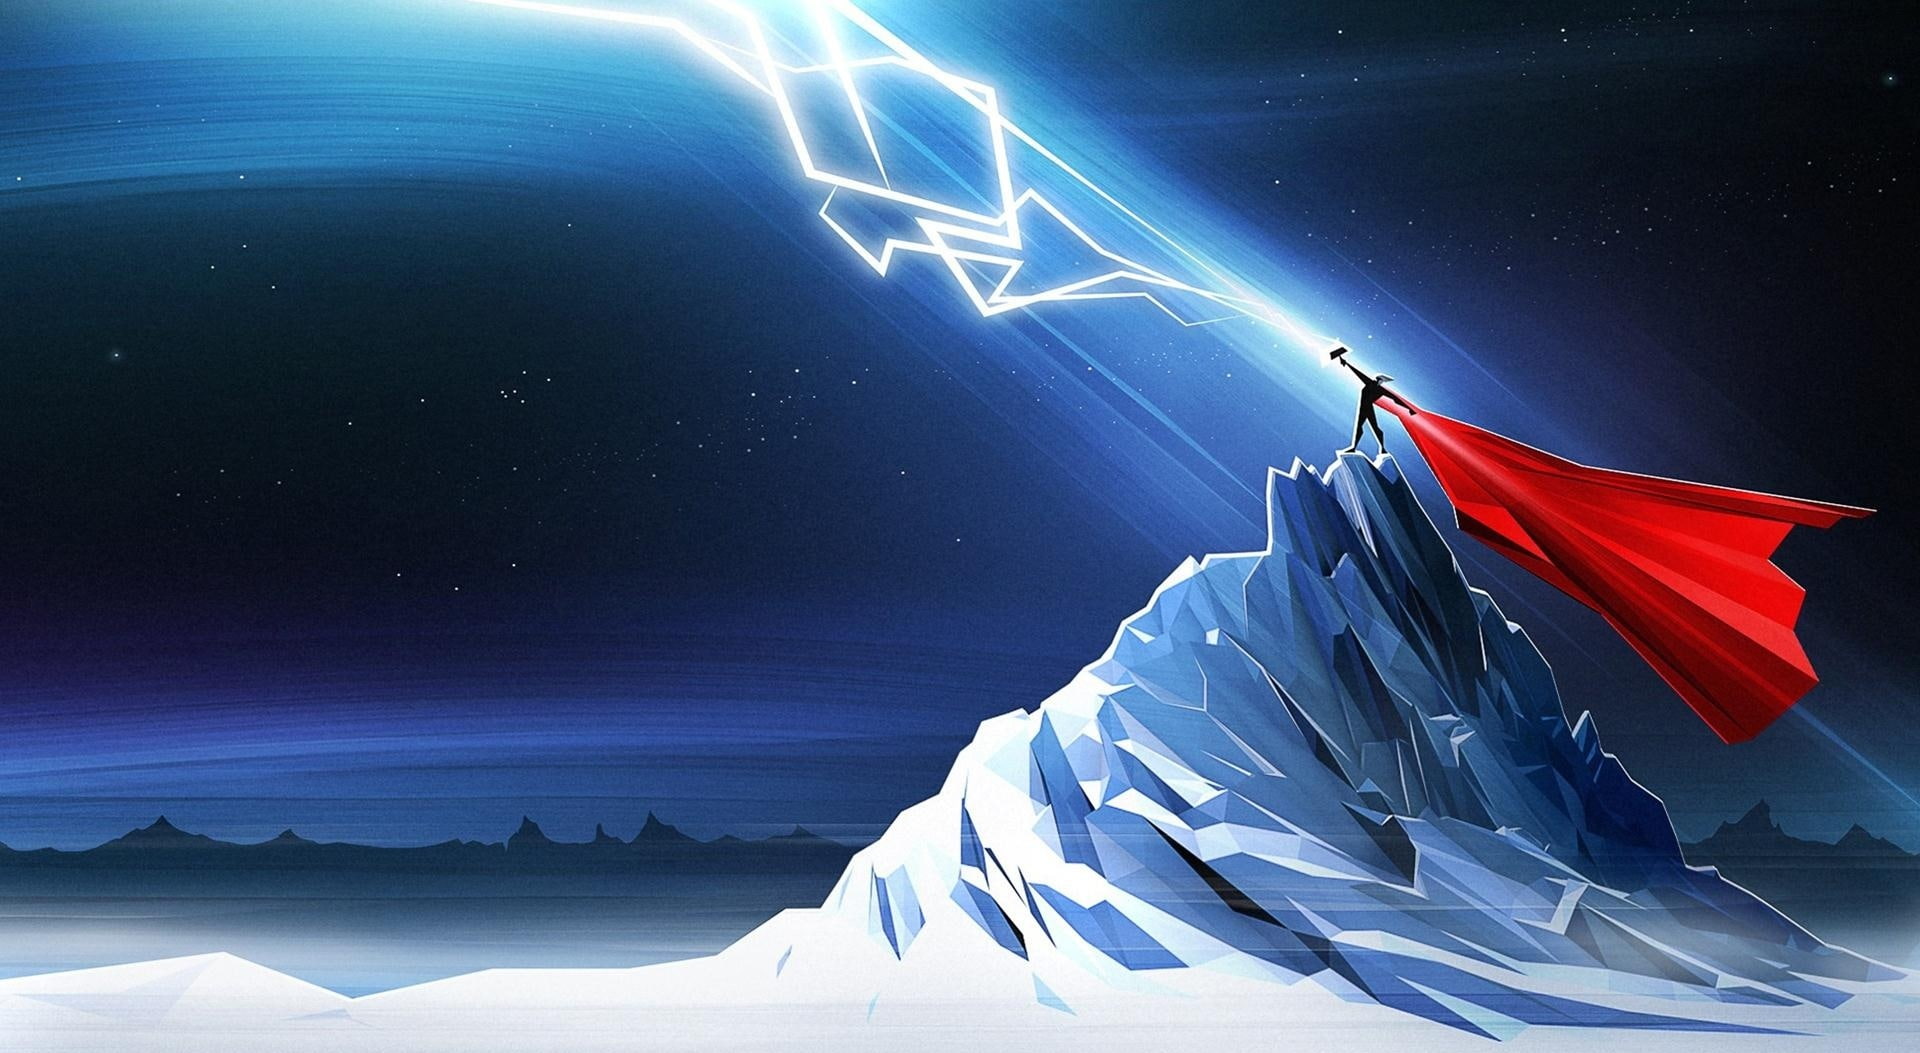 Thor Lightning Art, snow mountain digital wallpaper, Cartoons